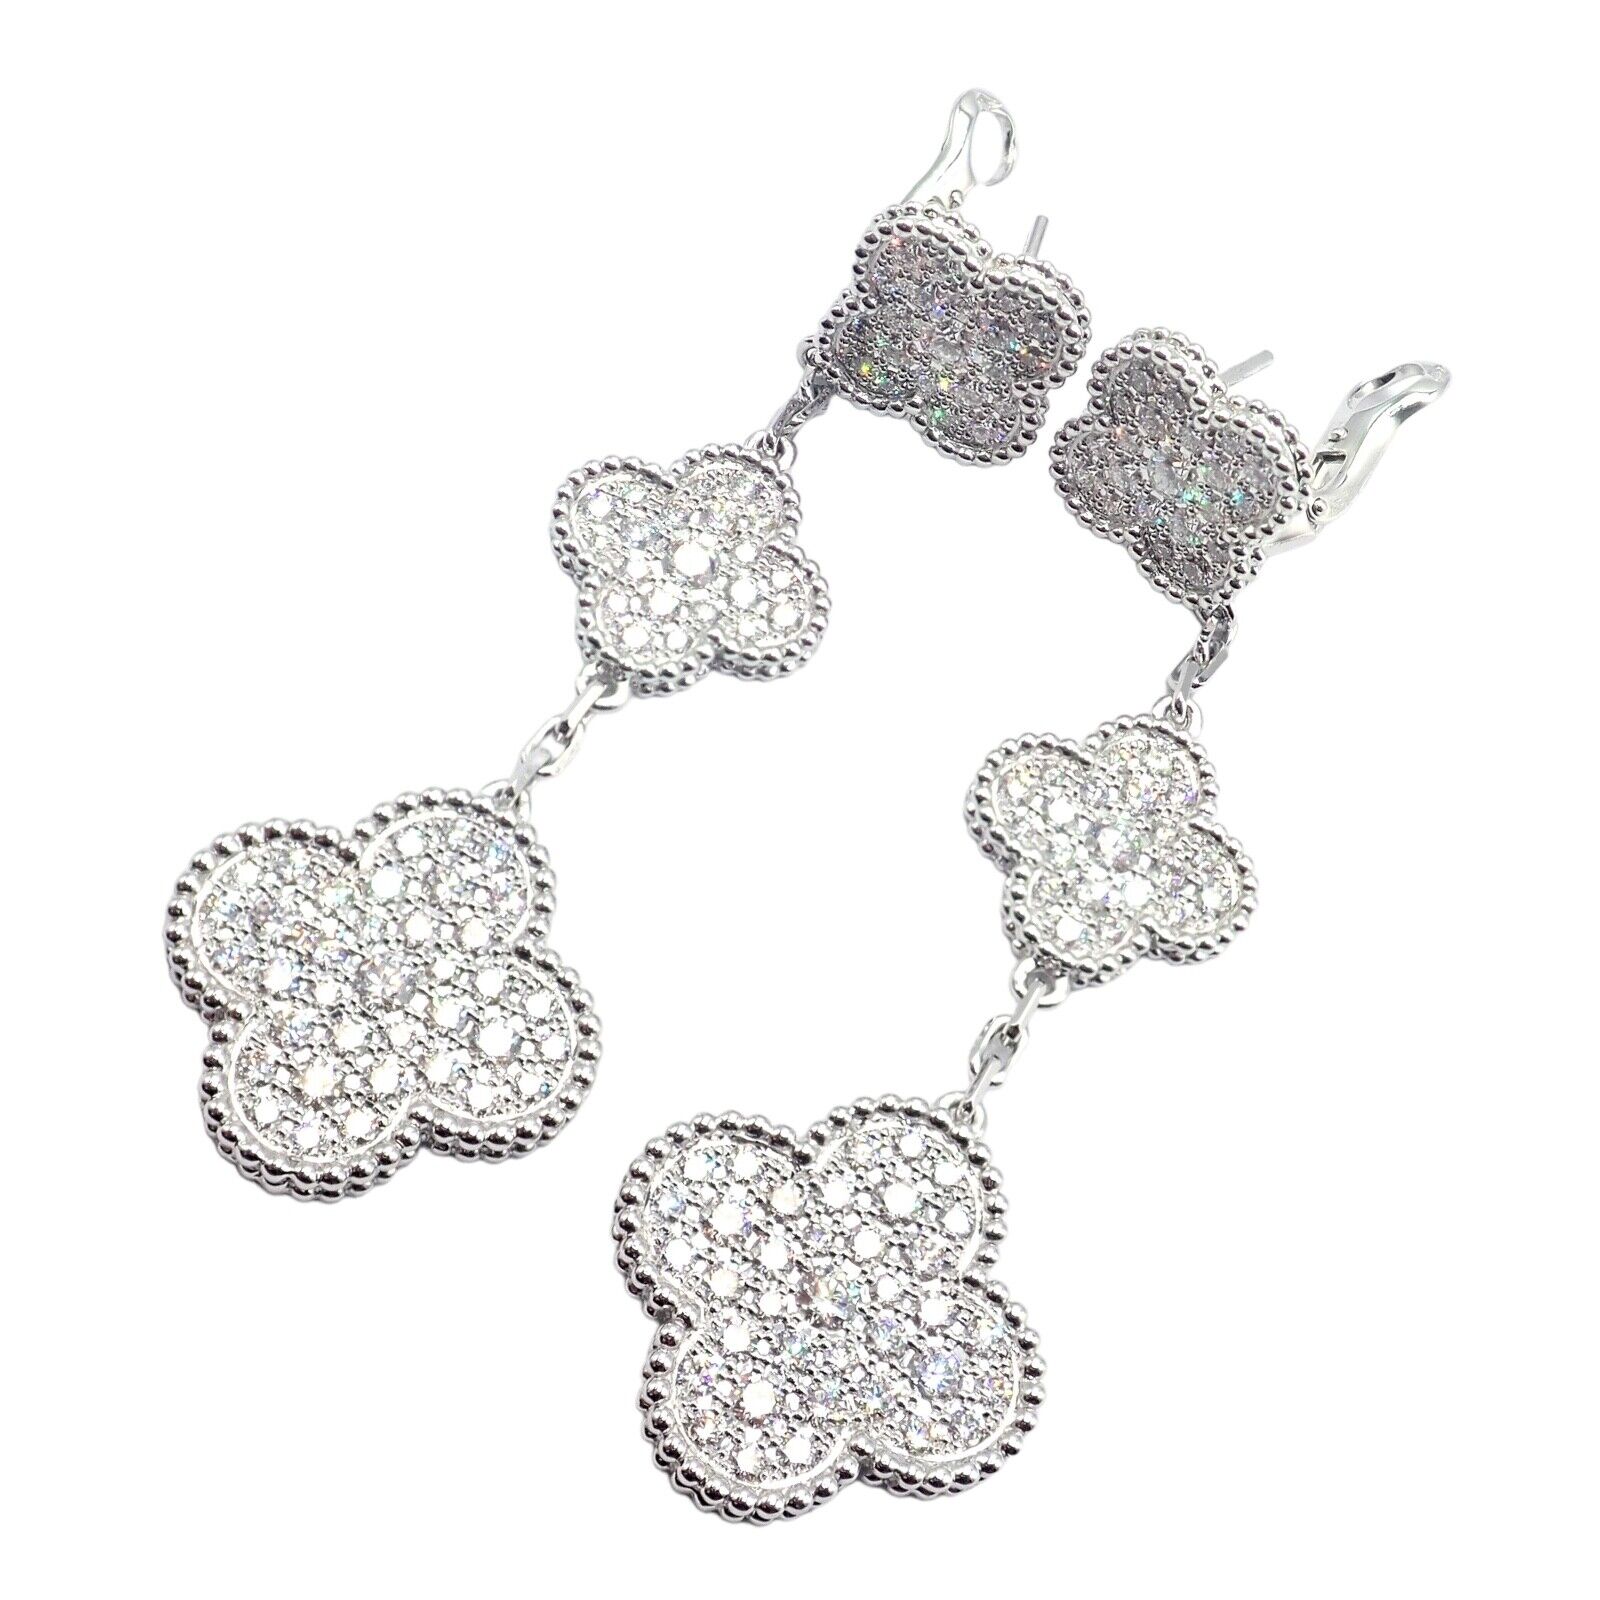 Van Cleef & Arpels Jewelry & Watches:Fine Jewelry:Earrings Van Cleef & Arpels 18k White Gold Diamond Magic Alhambra 3 Motifs Earrings